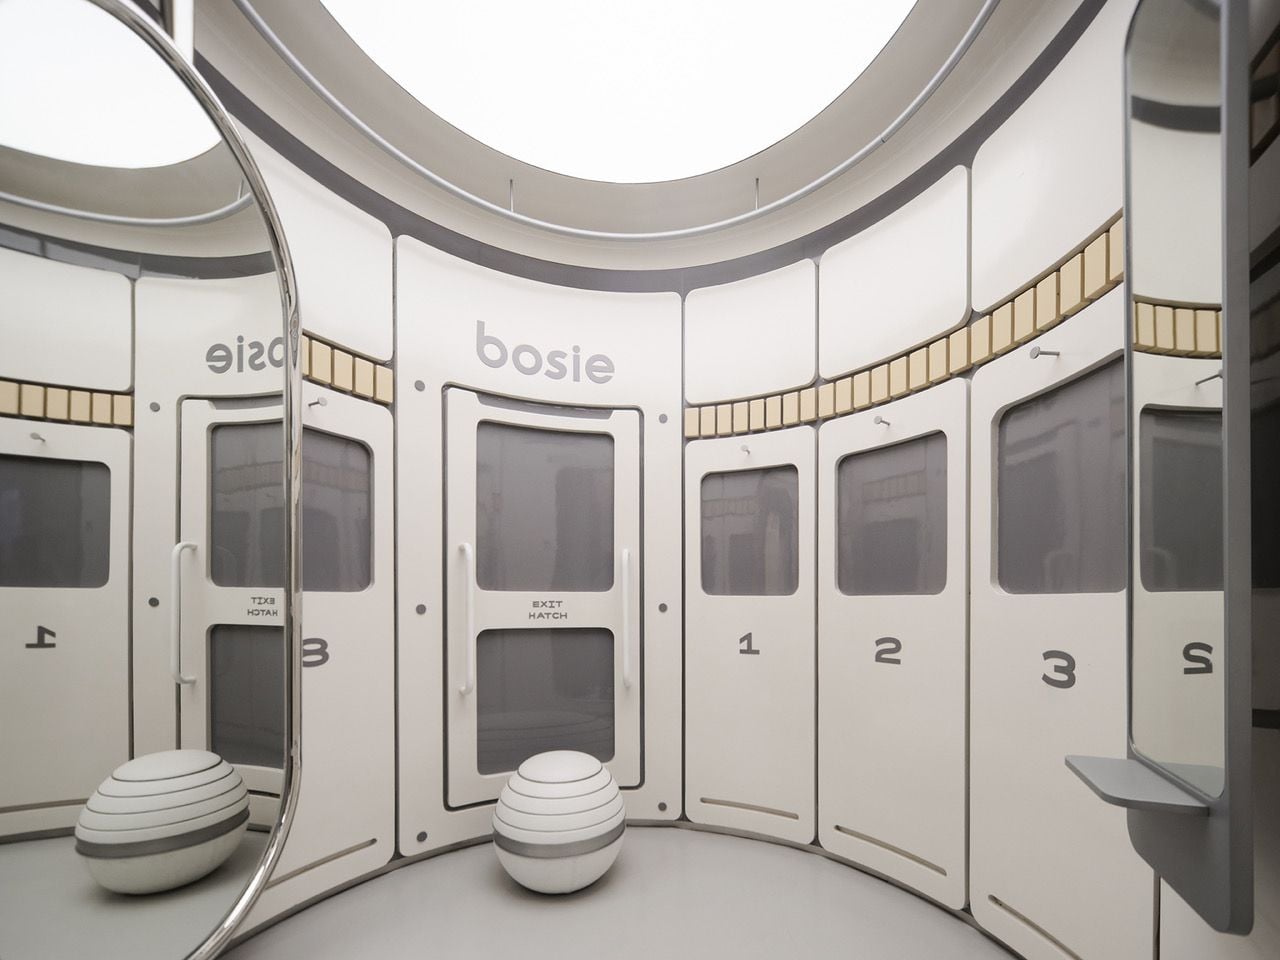 Capsule-like fitting rooms in Bosie's spaceship-themed Shanghai retail store.